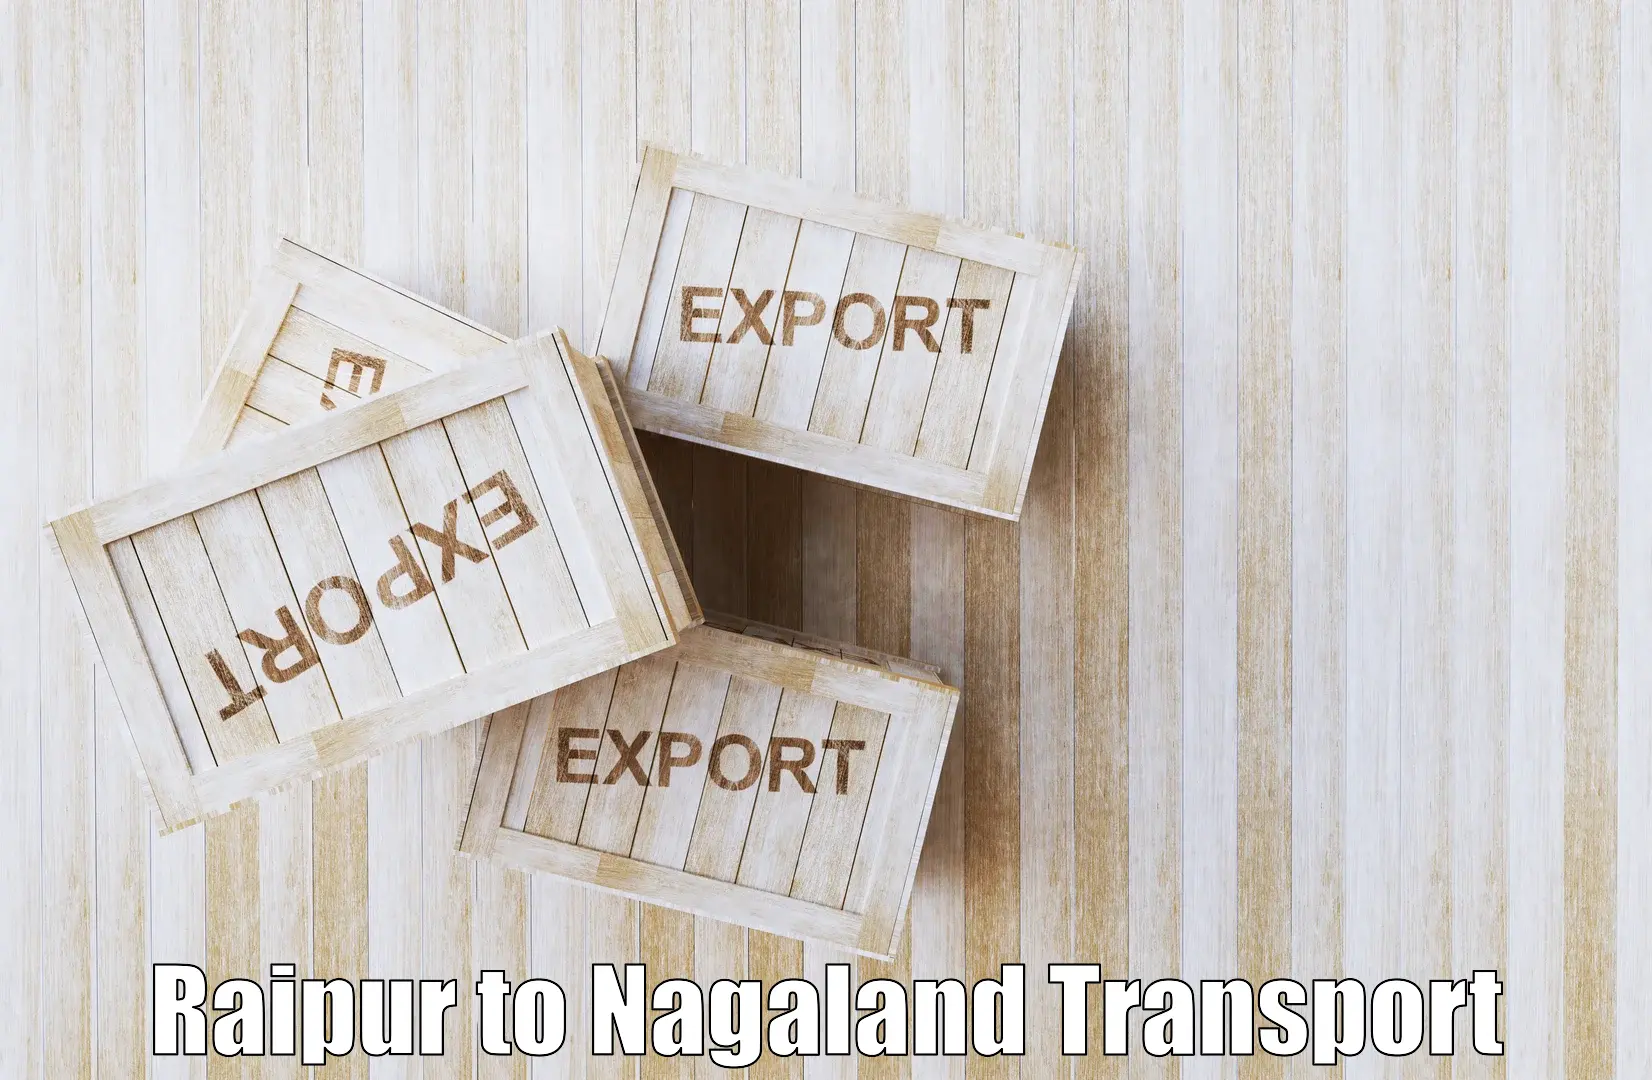 Nearby transport service Raipur to Dimapur